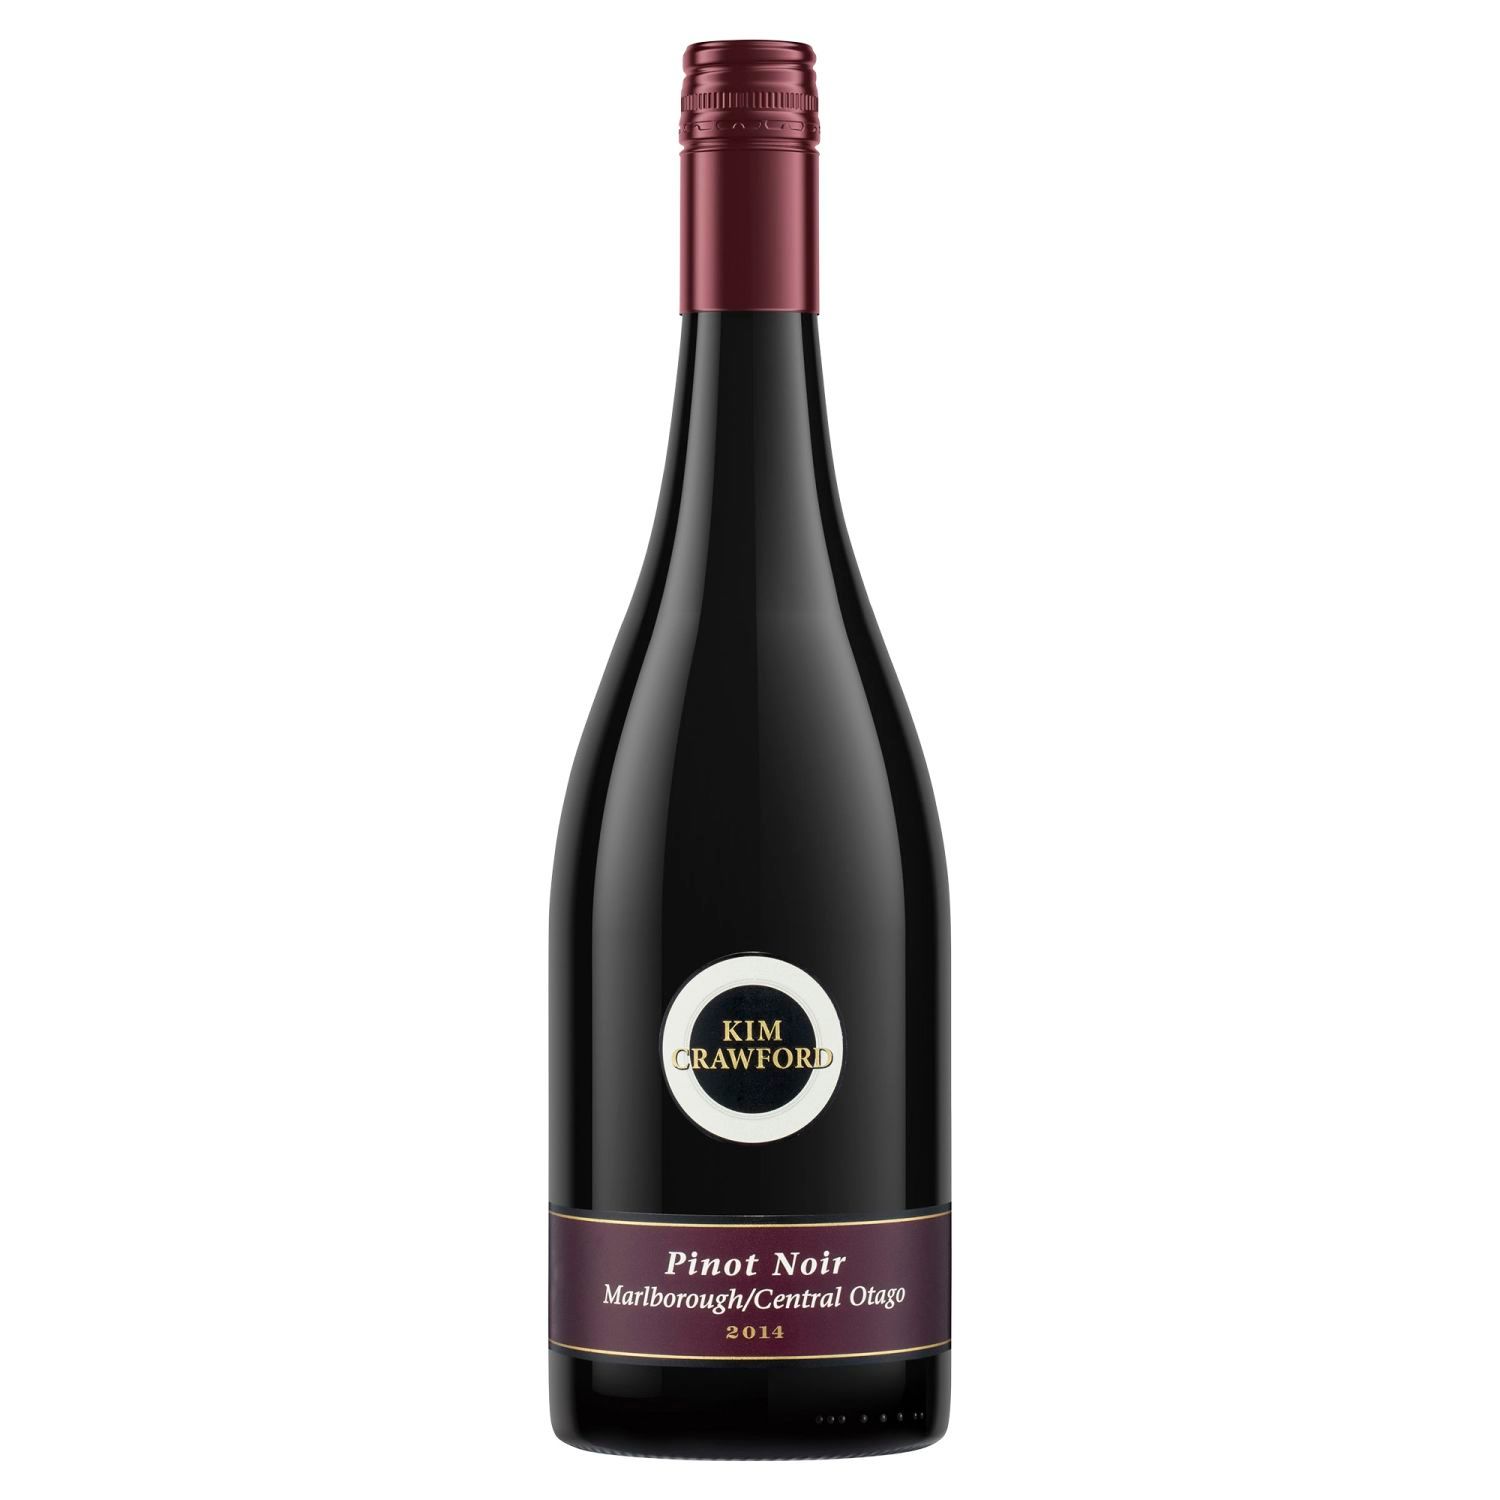 Kim Crawford New Zealand Pinot Noir is rich and supple, with red berry flavors providing some nice fruit sweetness.<br /> <br />Alcohol Volume: 13.00%<br /><br />Pack Format: Bottle<br /><br />Standard Drinks: 7.4</br /><br />Pack Type: Bottle<br /><br />Country of Origin: New Zealand<br /><br />Region: Marlborough<br /><br />Vintage: Vintages Vary<br />